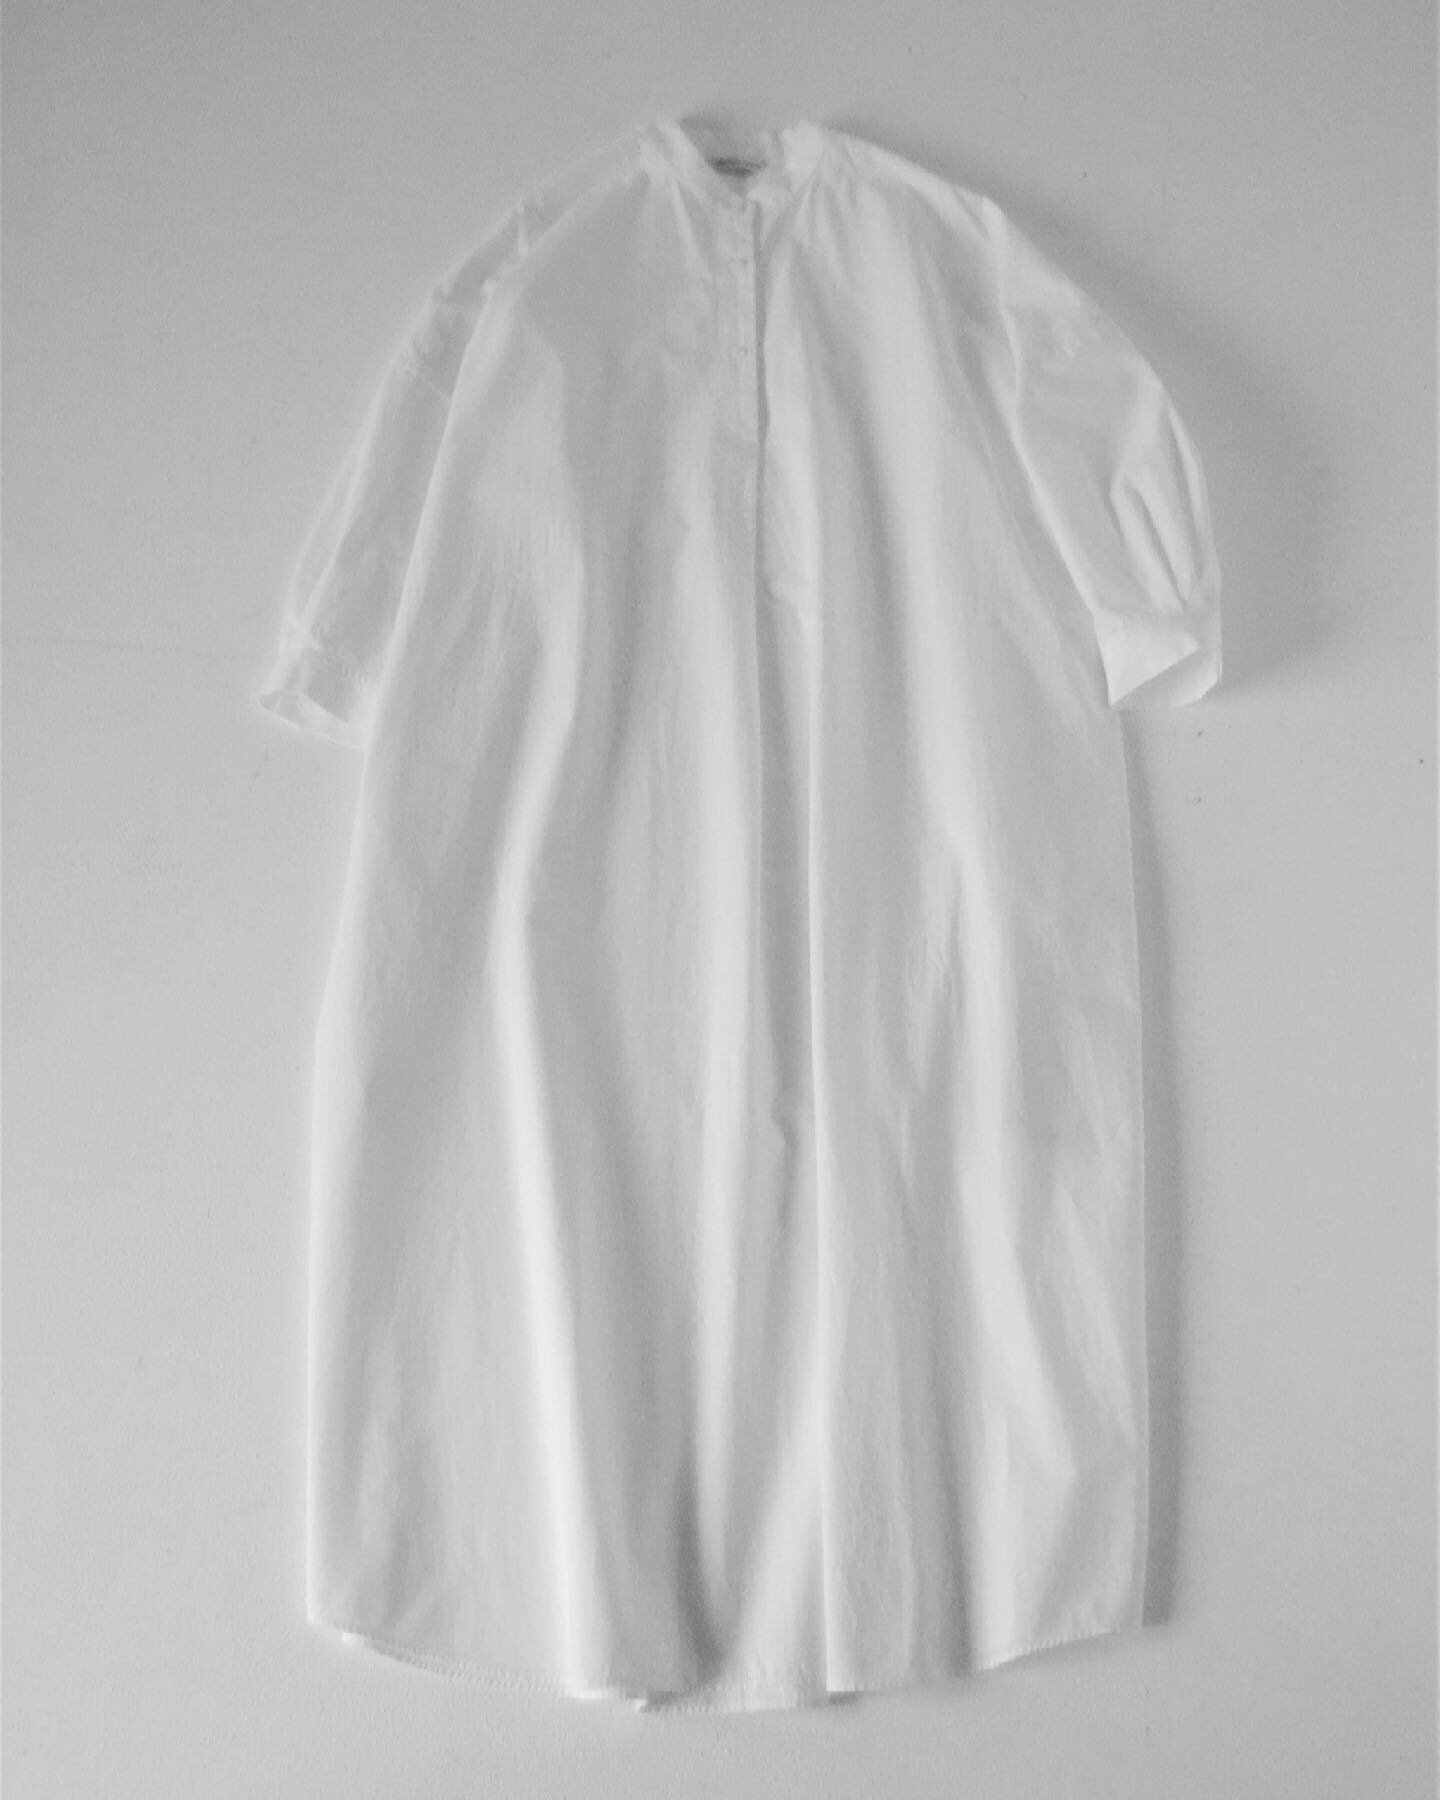 .
.
ARTS&amp;SCIENCEより春夏のアイテムが届きました。
プルオーバータイプのシャツワンピースは3色届いています。シンプルなのでベストや羽織を重ねて頂けます。
.
.
style：Bulky box pullover shirt dress
material：High count special cotton 40
composition：cotton 100%
size：1
color：off white
price：&yen;64,000+tax
.
.
.
#artsan